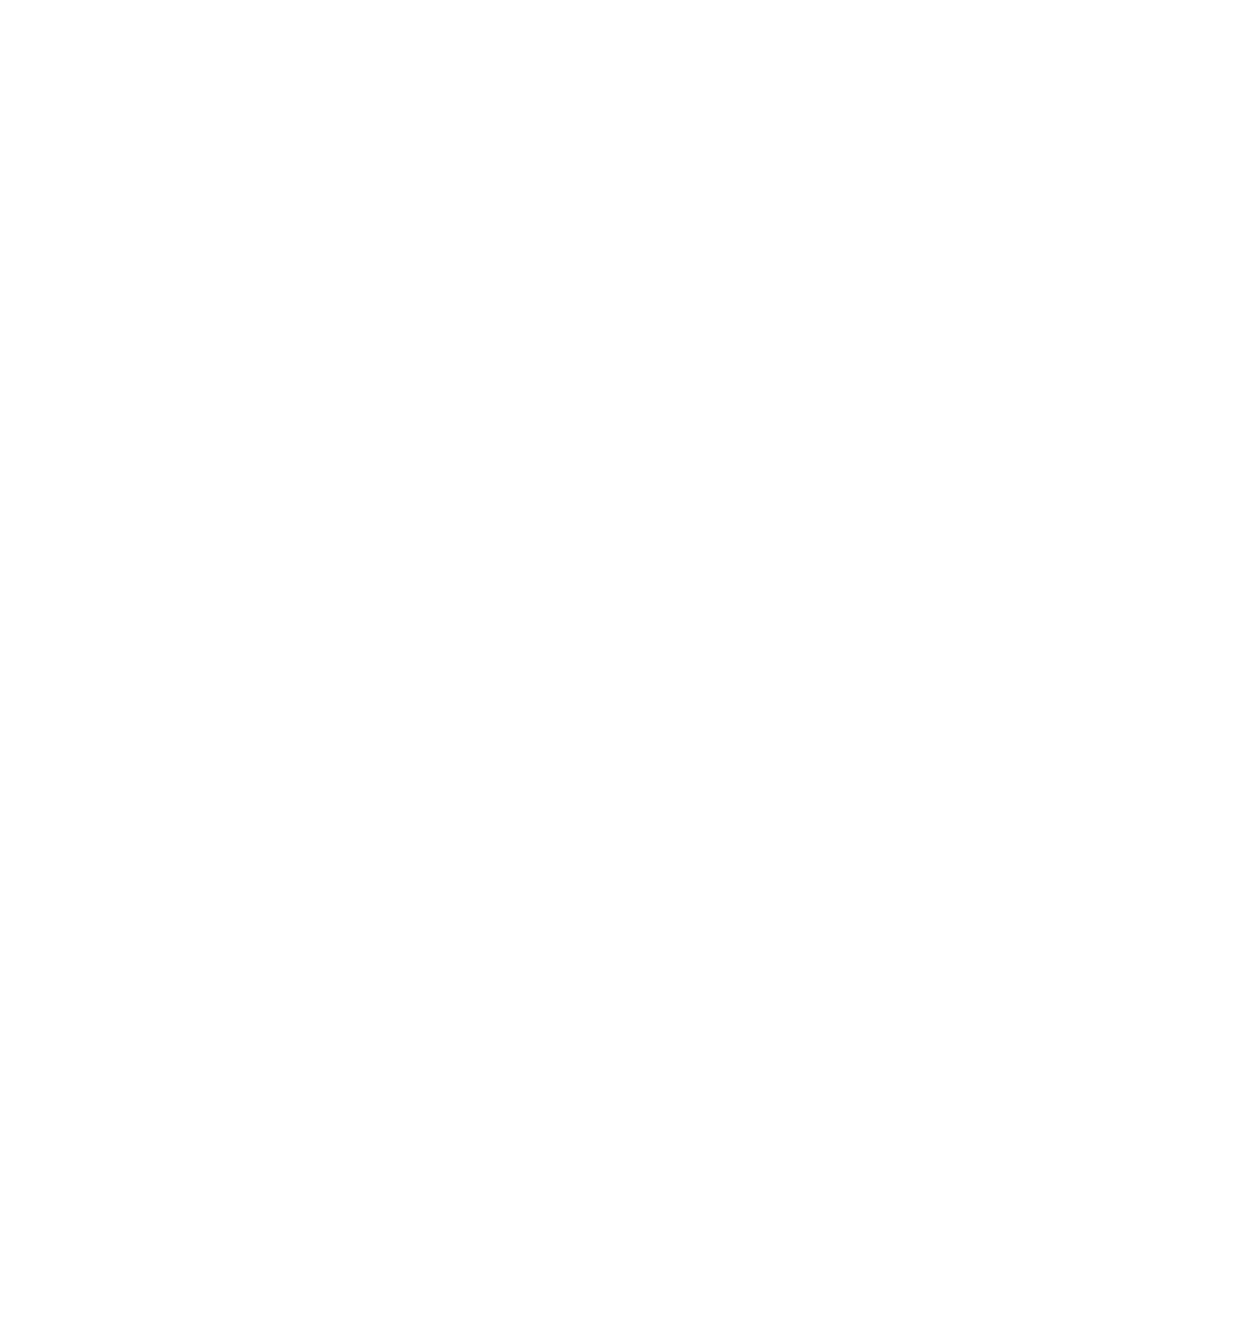 Firestone legends day new. Ticket clipart concert